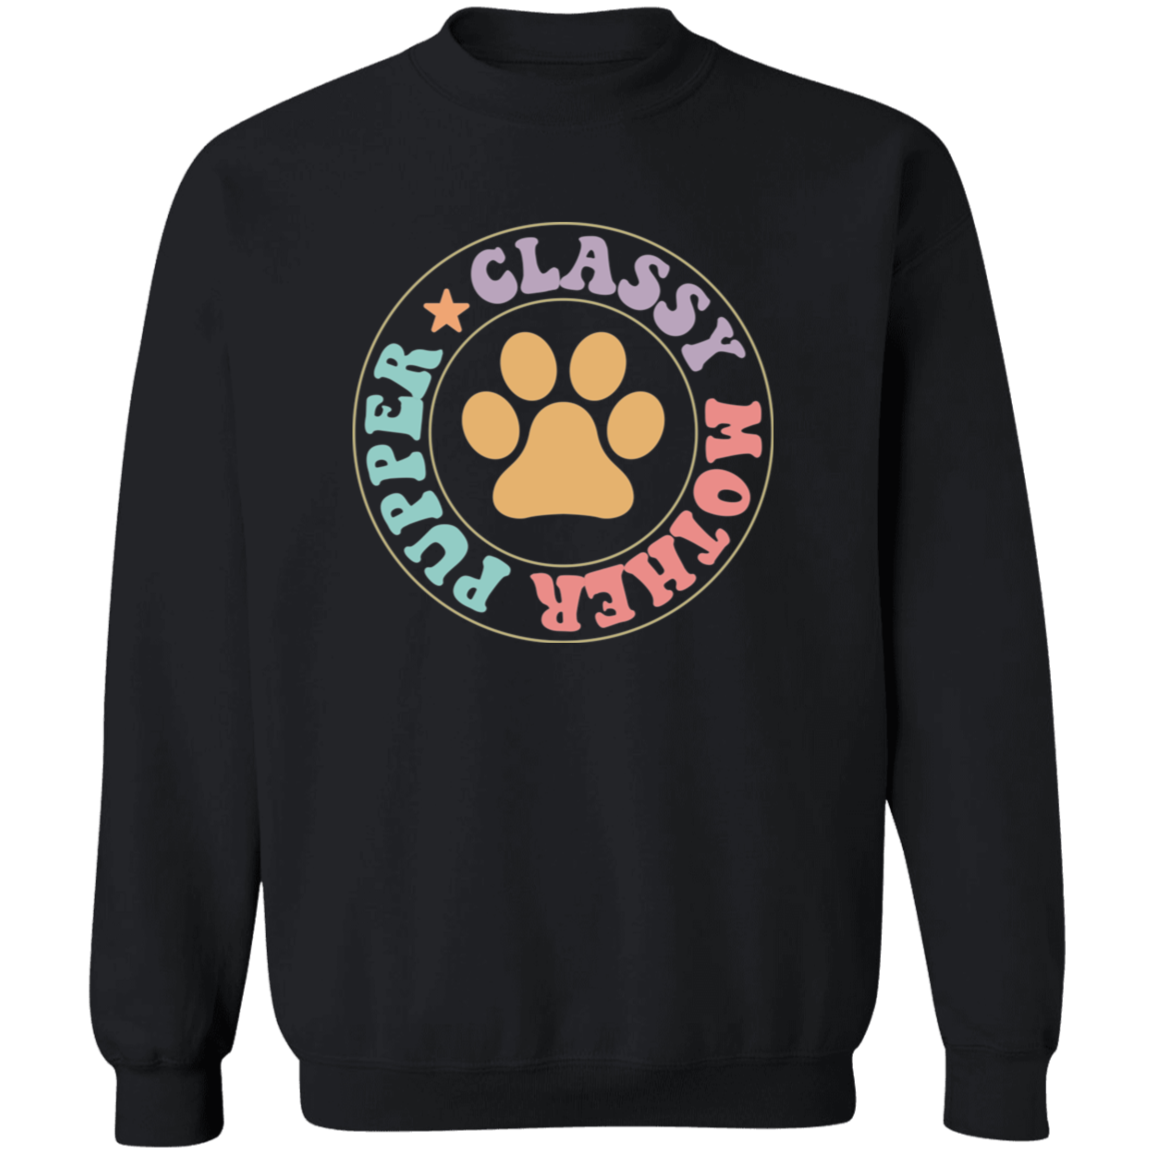 Classy Mother Pupper Dog Mom Crewneck Pullover Sweatshirt